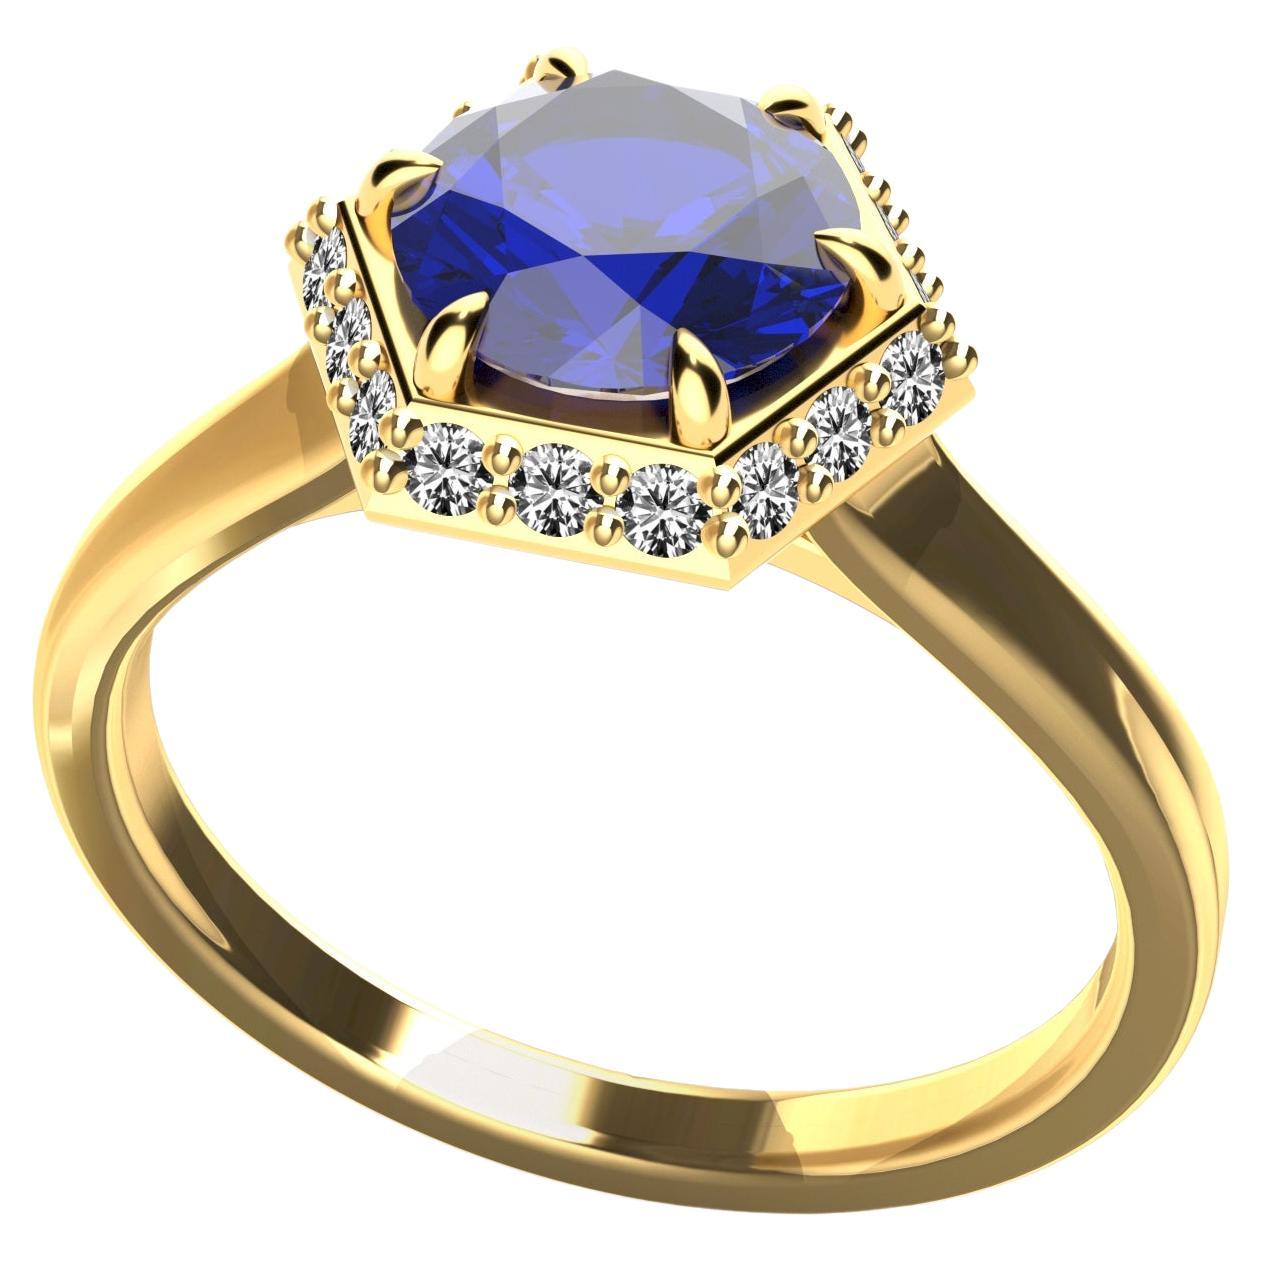 Im Angebot: 18 Karat Gelbgold Art Deco Saphir Ring mit GIA-Saphir ()